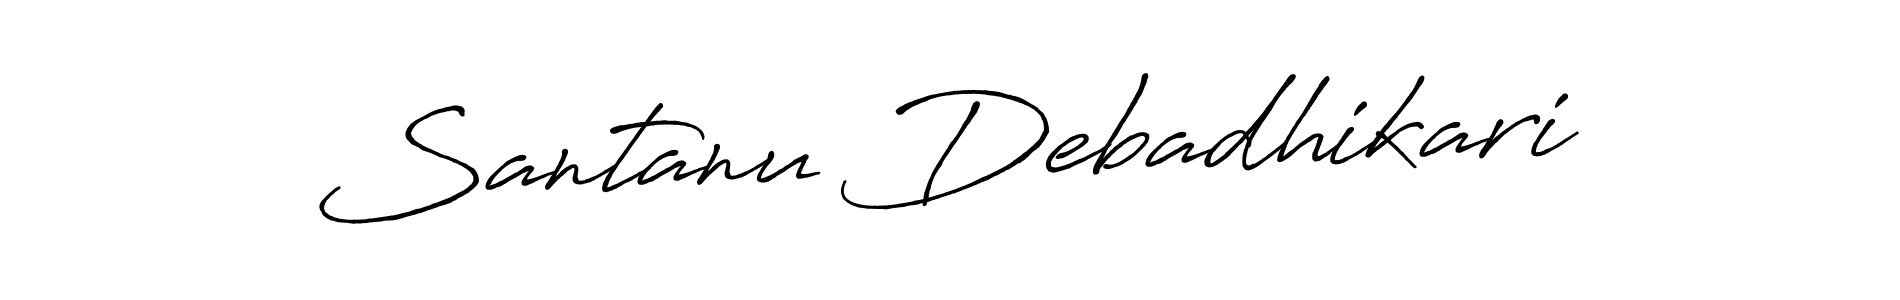 How to Draw Santanu Debadhikari signature style? Antro_Vectra_Bolder is a latest design signature styles for name Santanu Debadhikari. Santanu Debadhikari signature style 7 images and pictures png